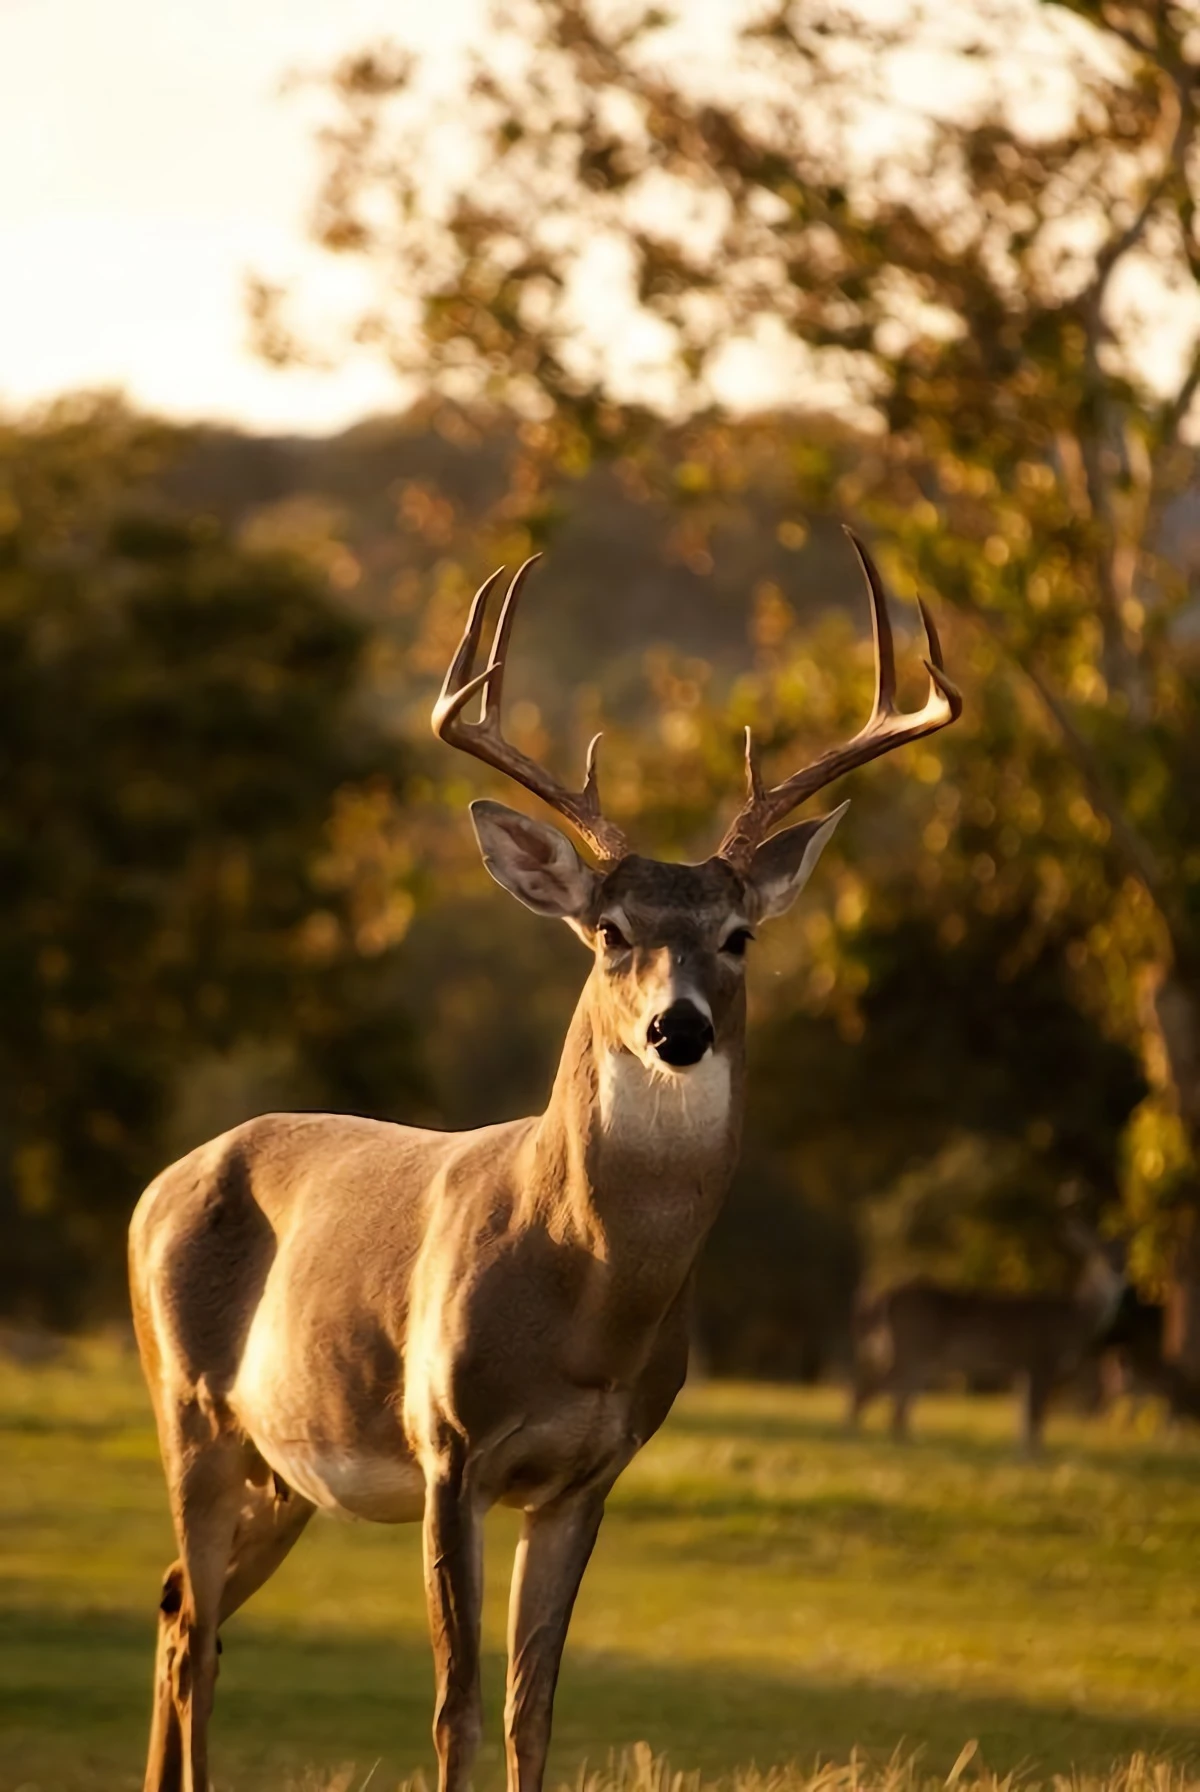 beautiful deer standing in0field